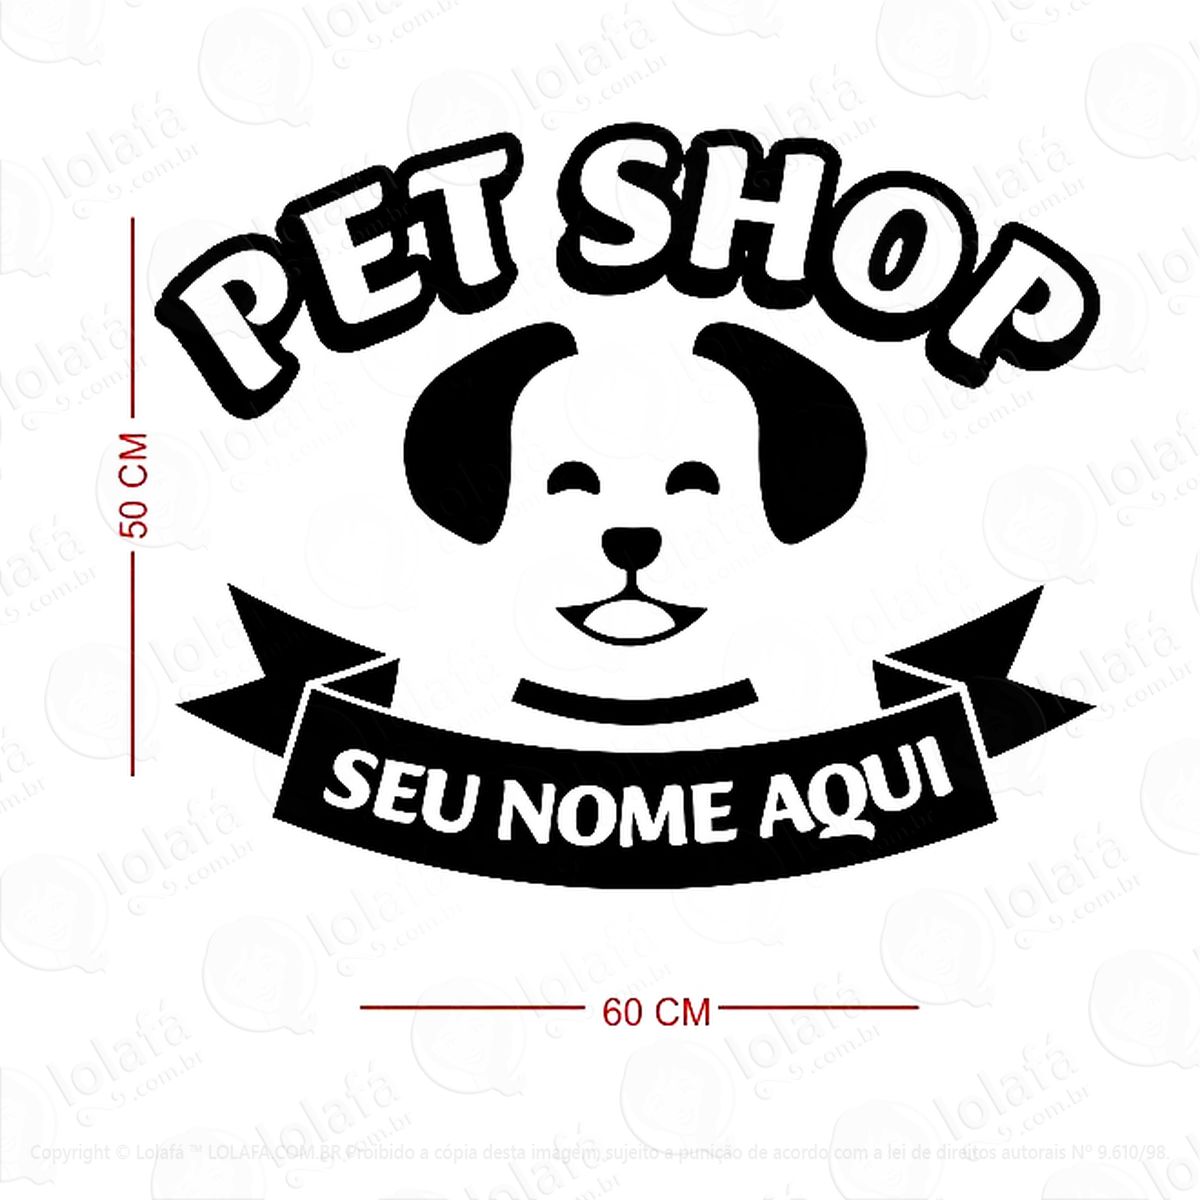 adesivo personalizado como seu nome petshop cachorro mod:442